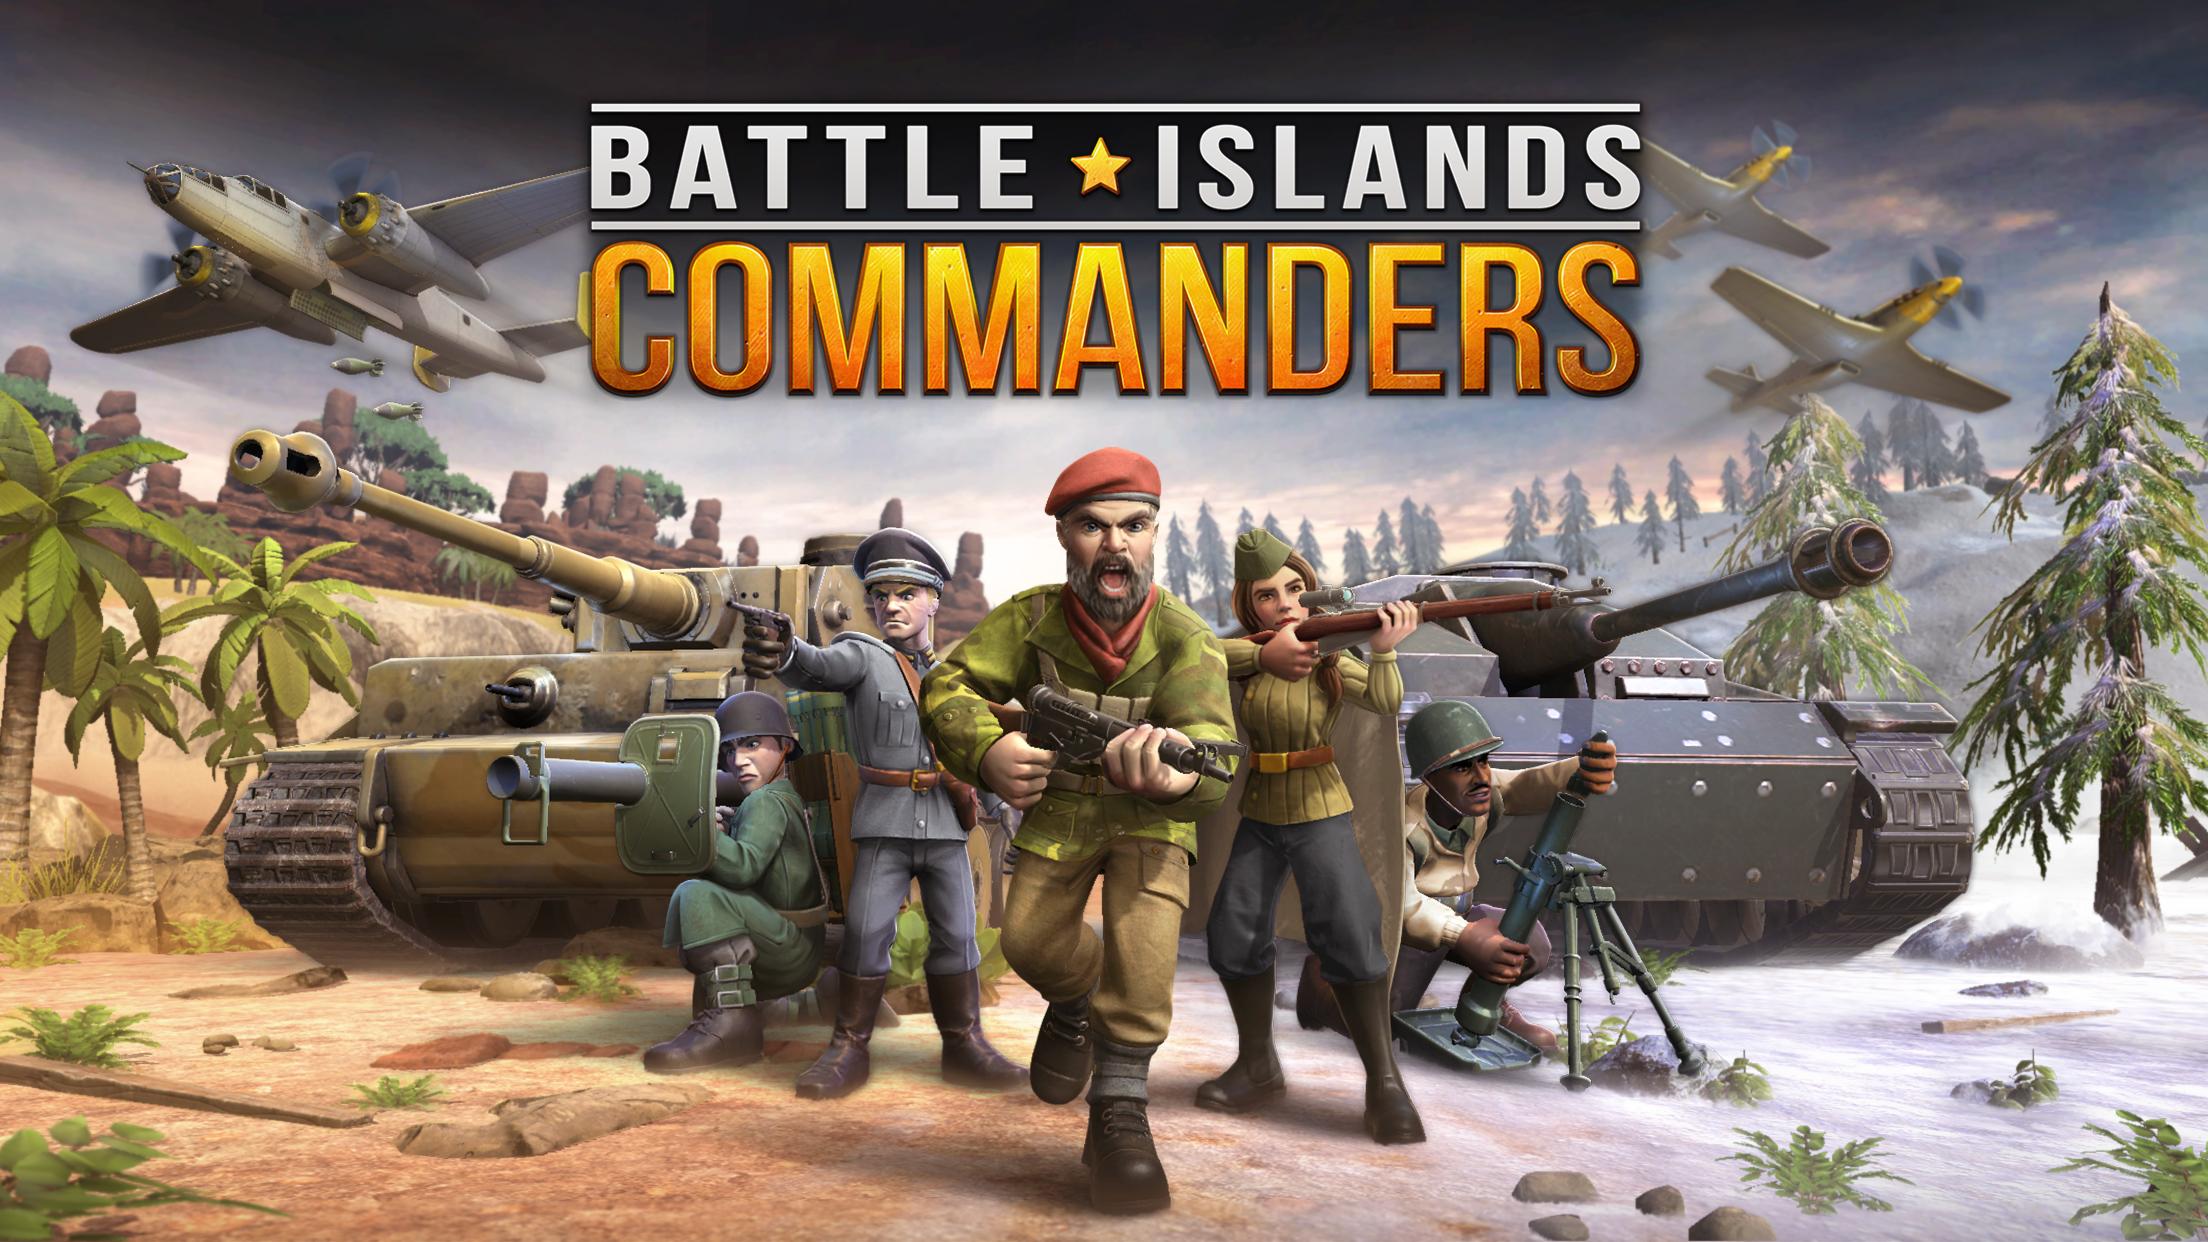 Command out. Батл Исланд командер. Игра Battle Islands. Battle Islands: Commanders. Battle Islands: Commanders игра.